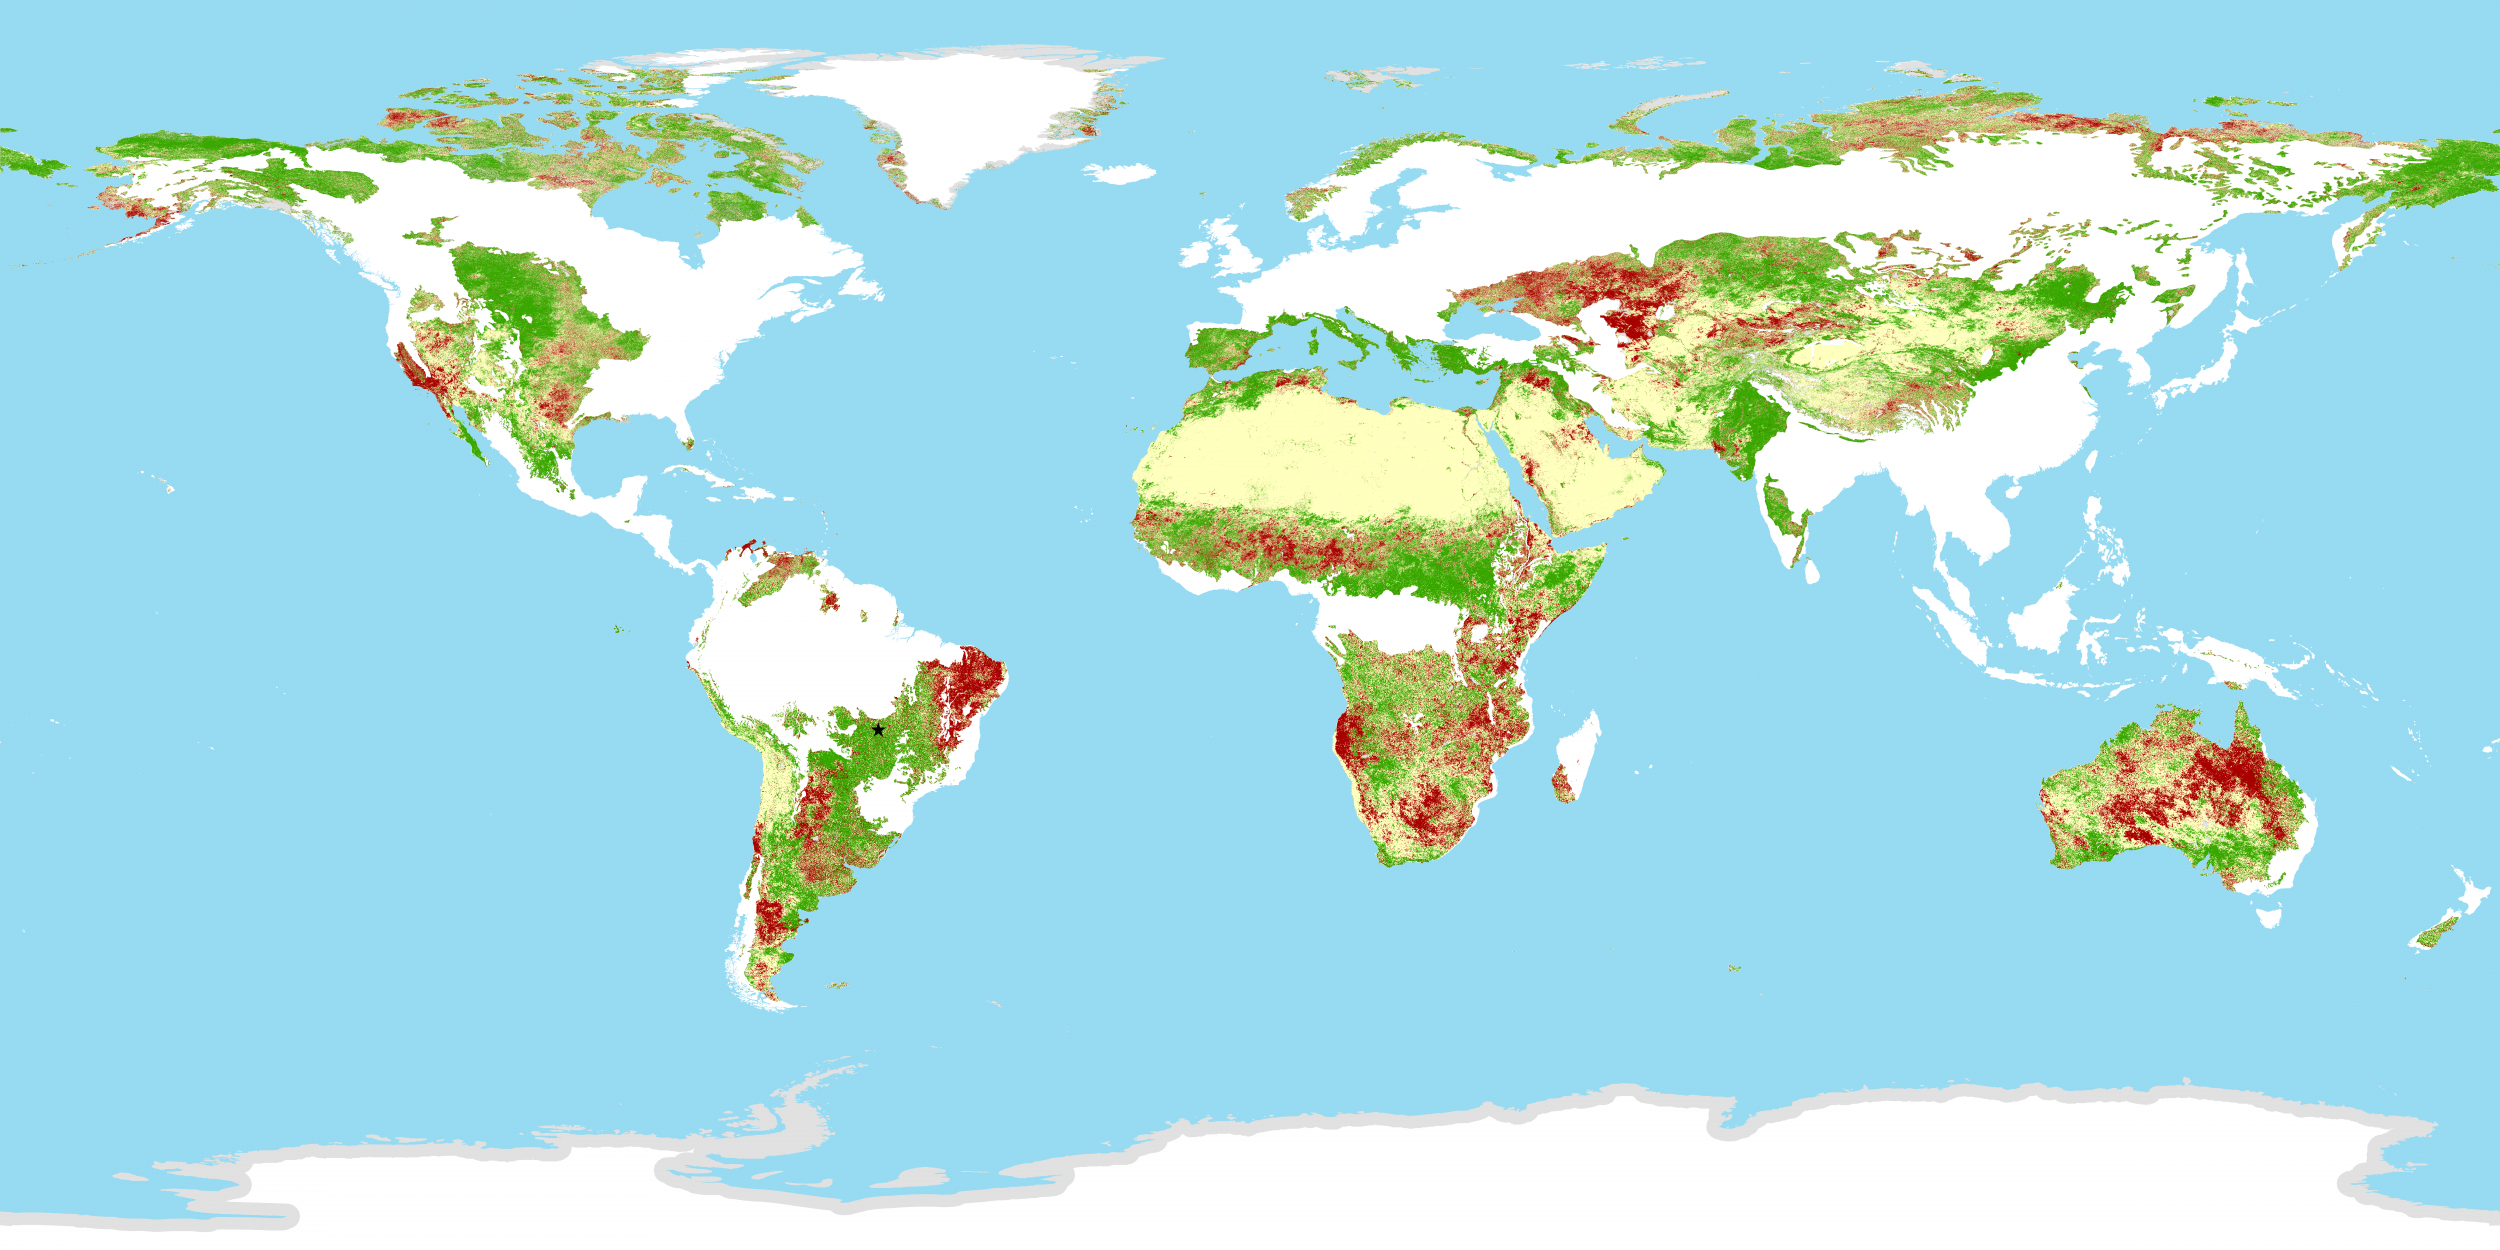 Progress towards land degradation neutrality (LDN) over the period 2001-2015 found in rangeland